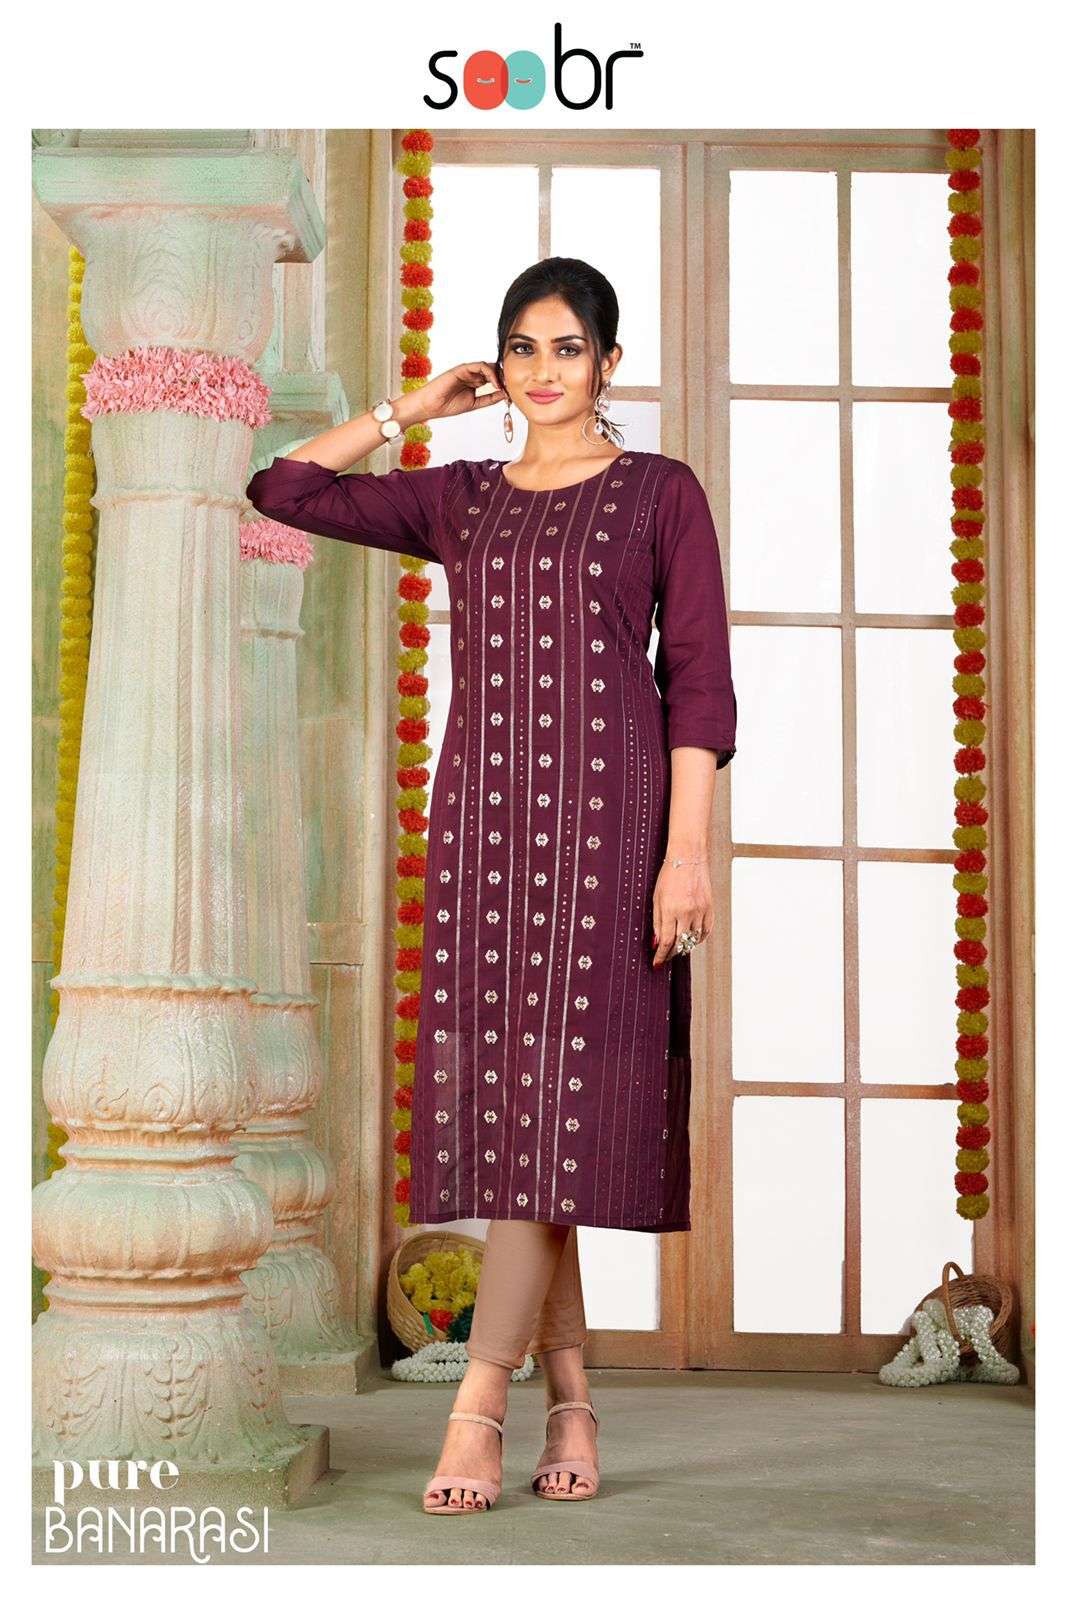 soobr pure banarasi silk fancy look banarasi weaving kurtis wholesale price surat